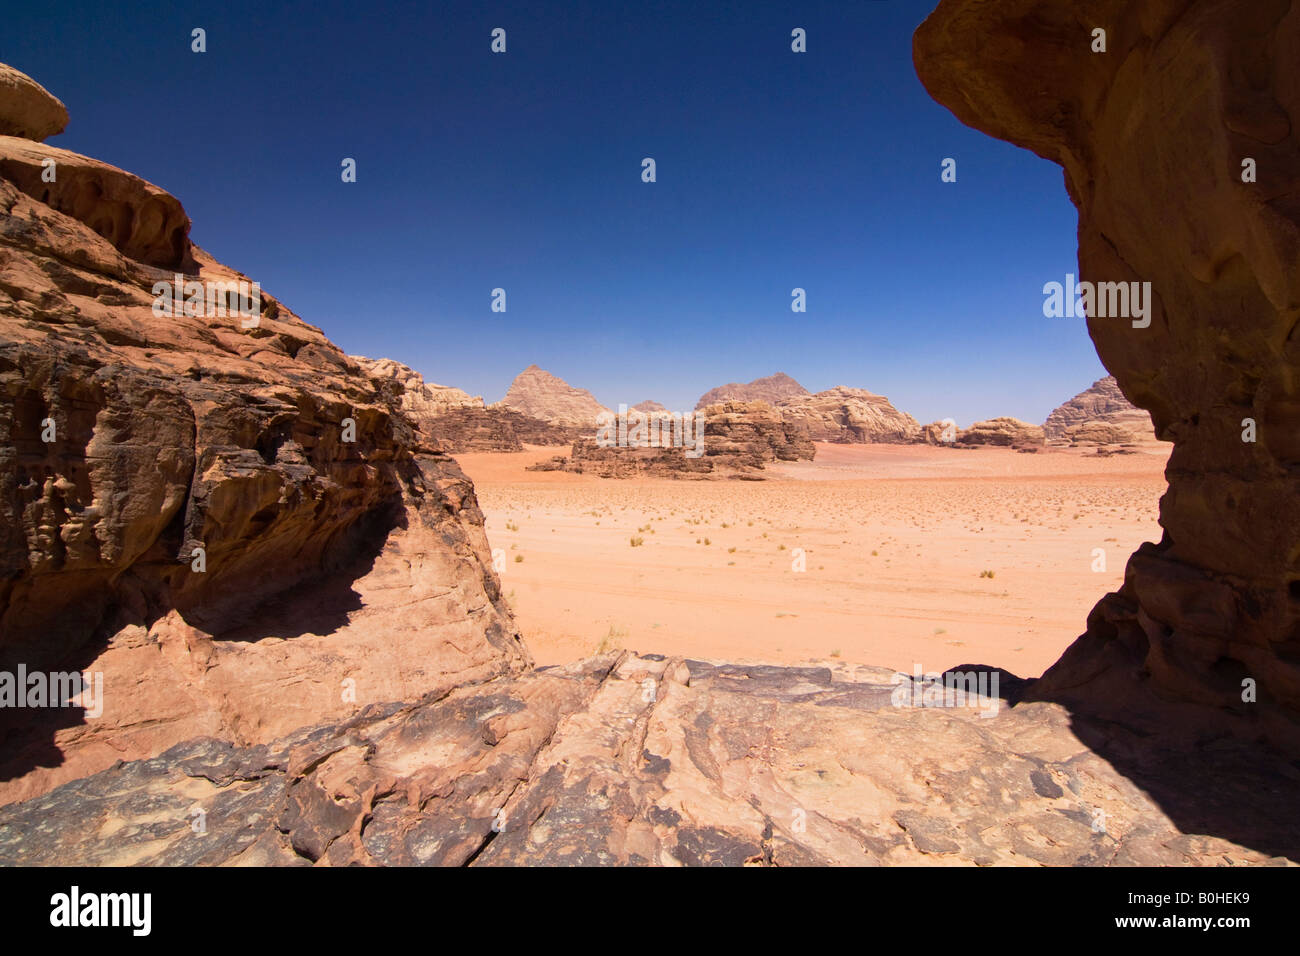 Rock formations in the desert, Wadi Rum, Jordan, Middle East Stock Photo